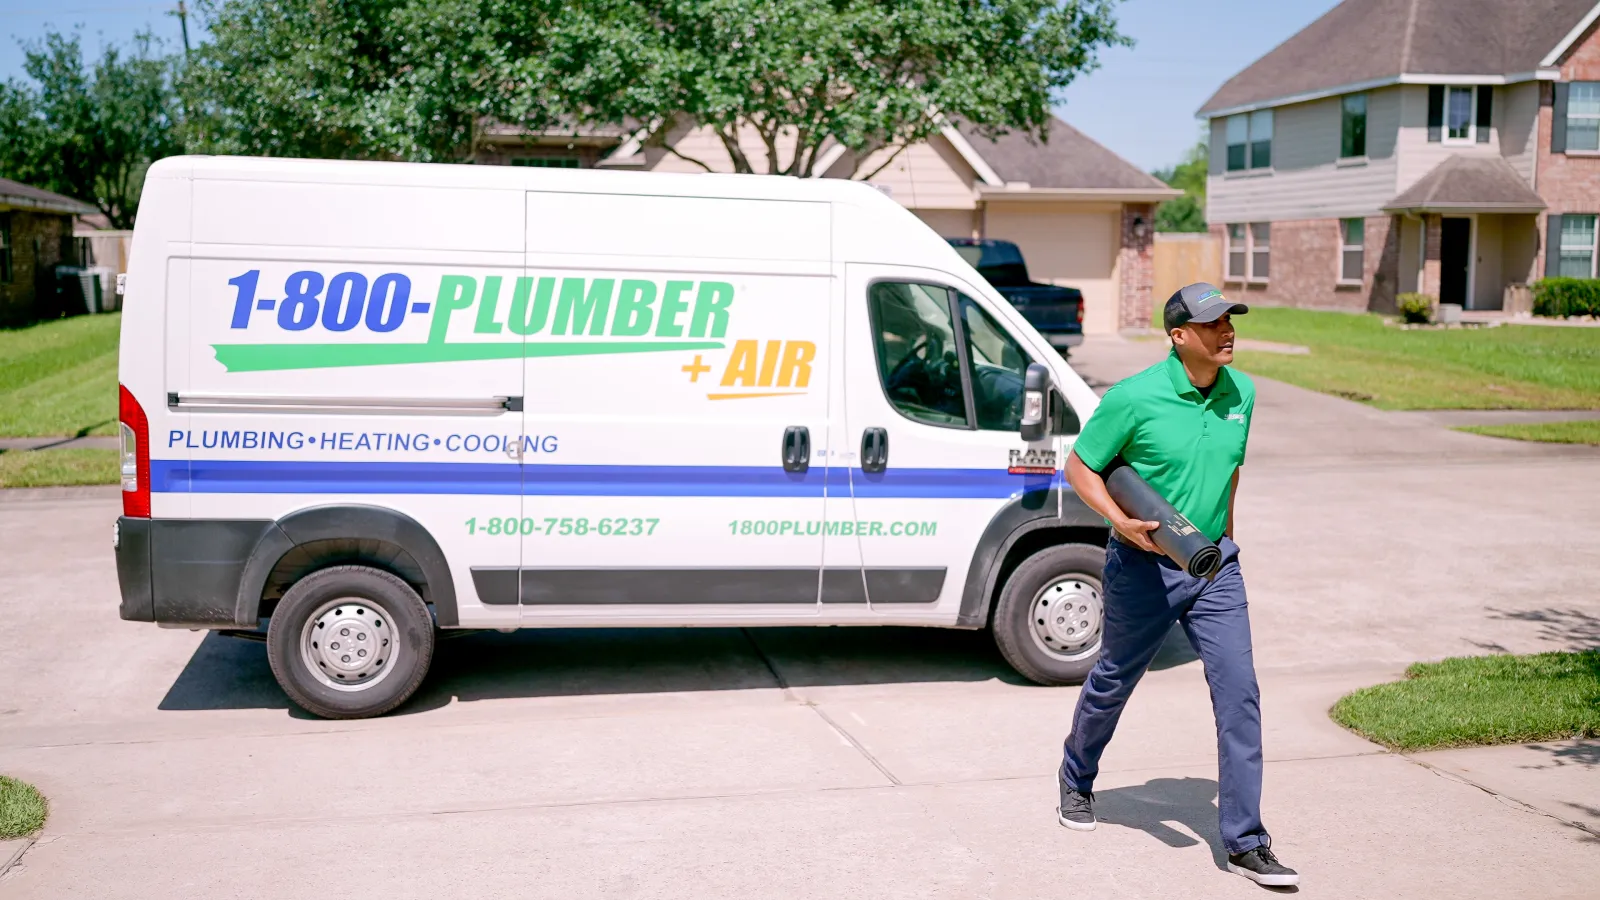 A Yukon, OK plumber repairs a home water leak